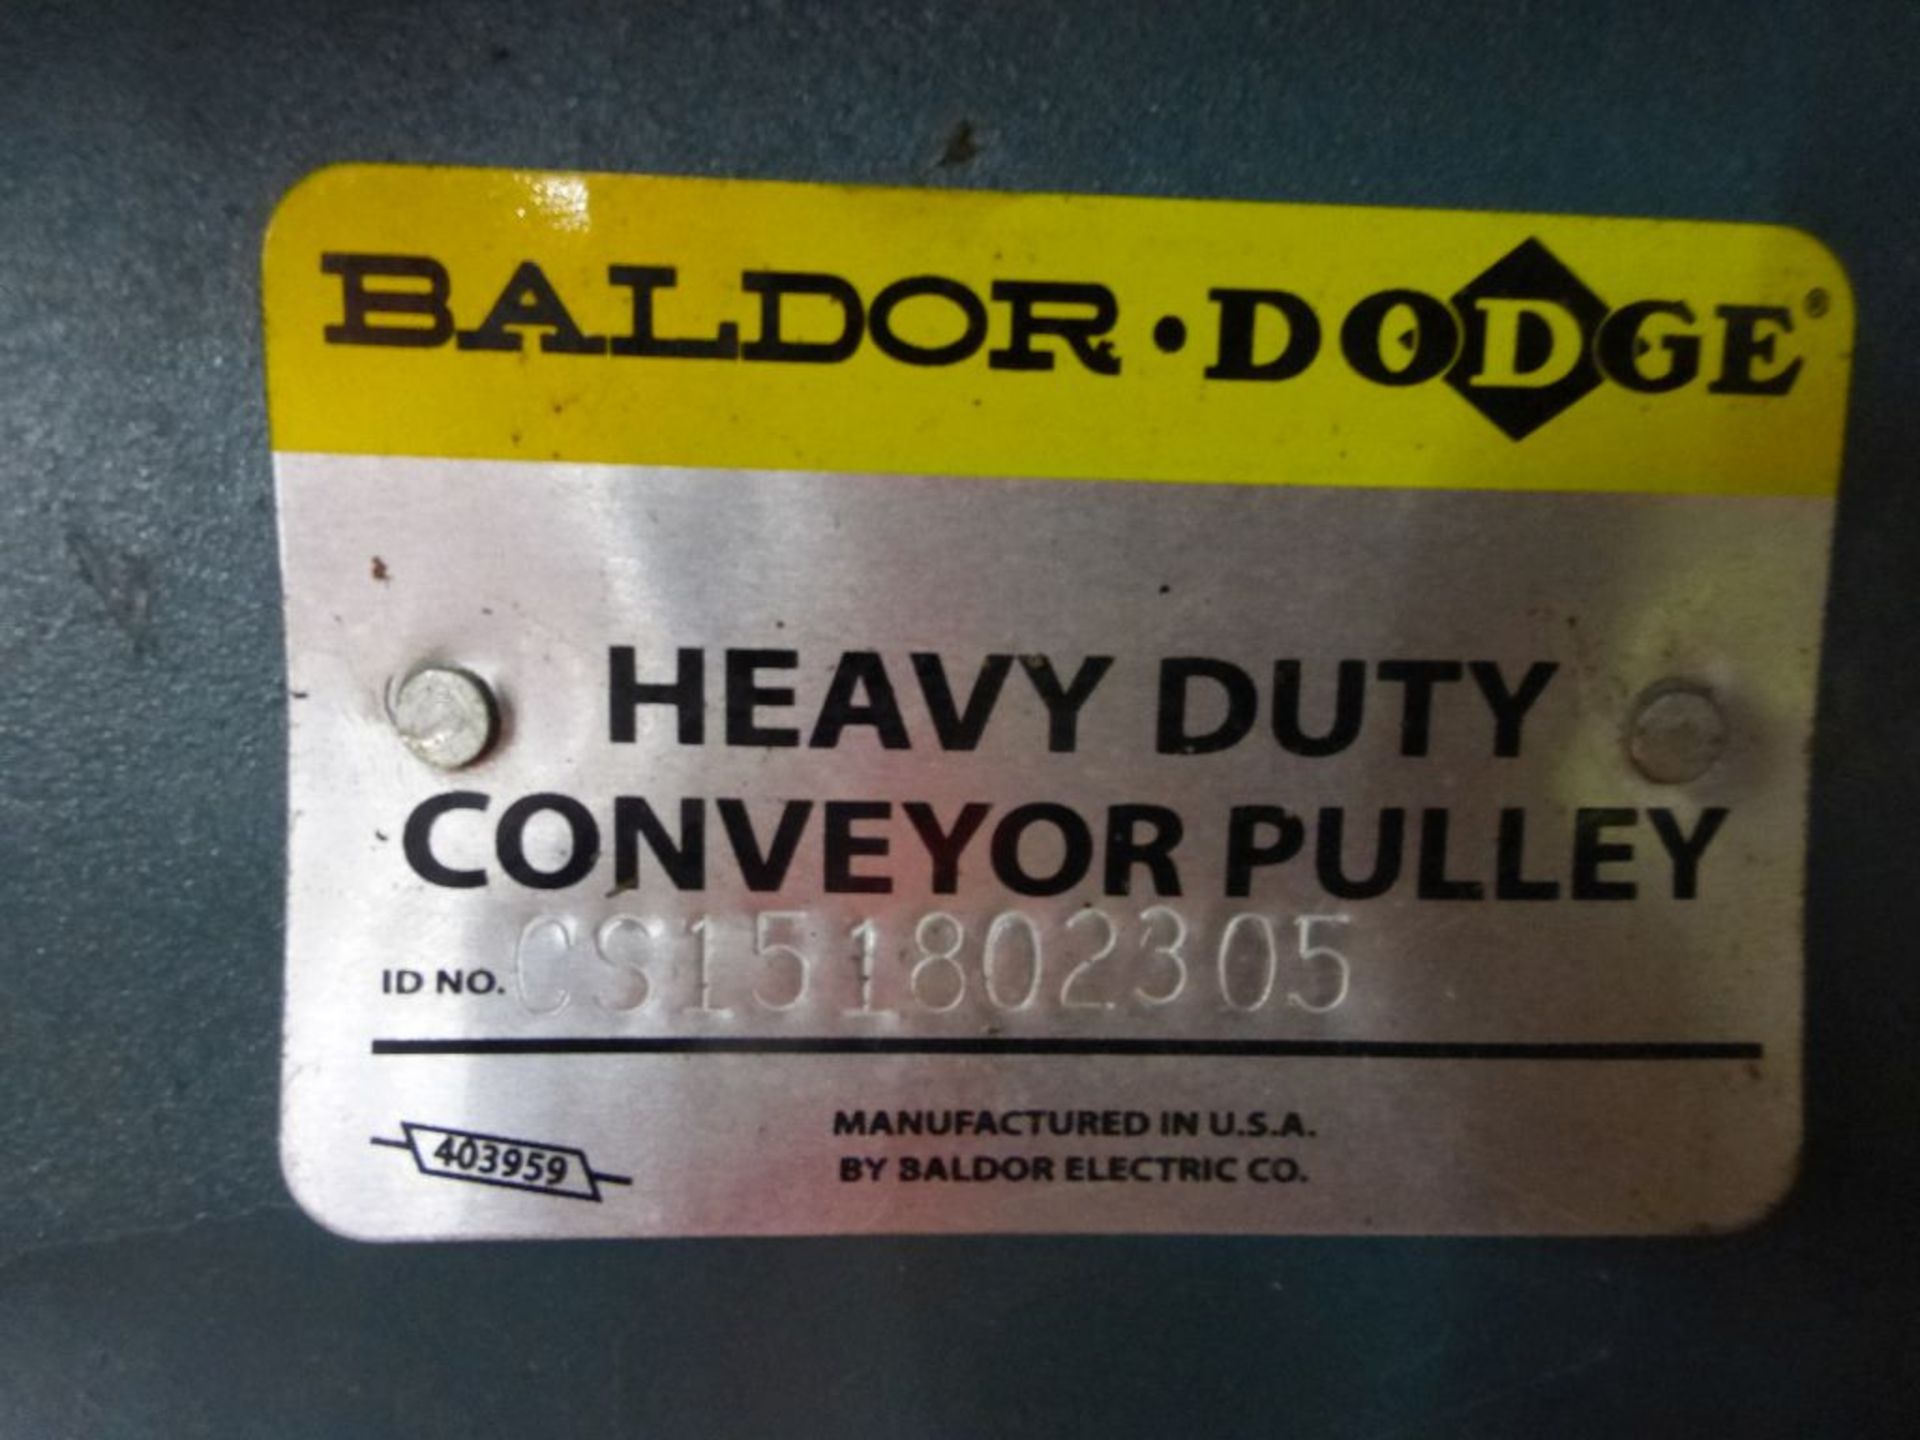 Baldor Dodge Heavy Duty Conveyor Pulley|Part No. CS151802305; 24"D x 51" LG Head - Image 7 of 7